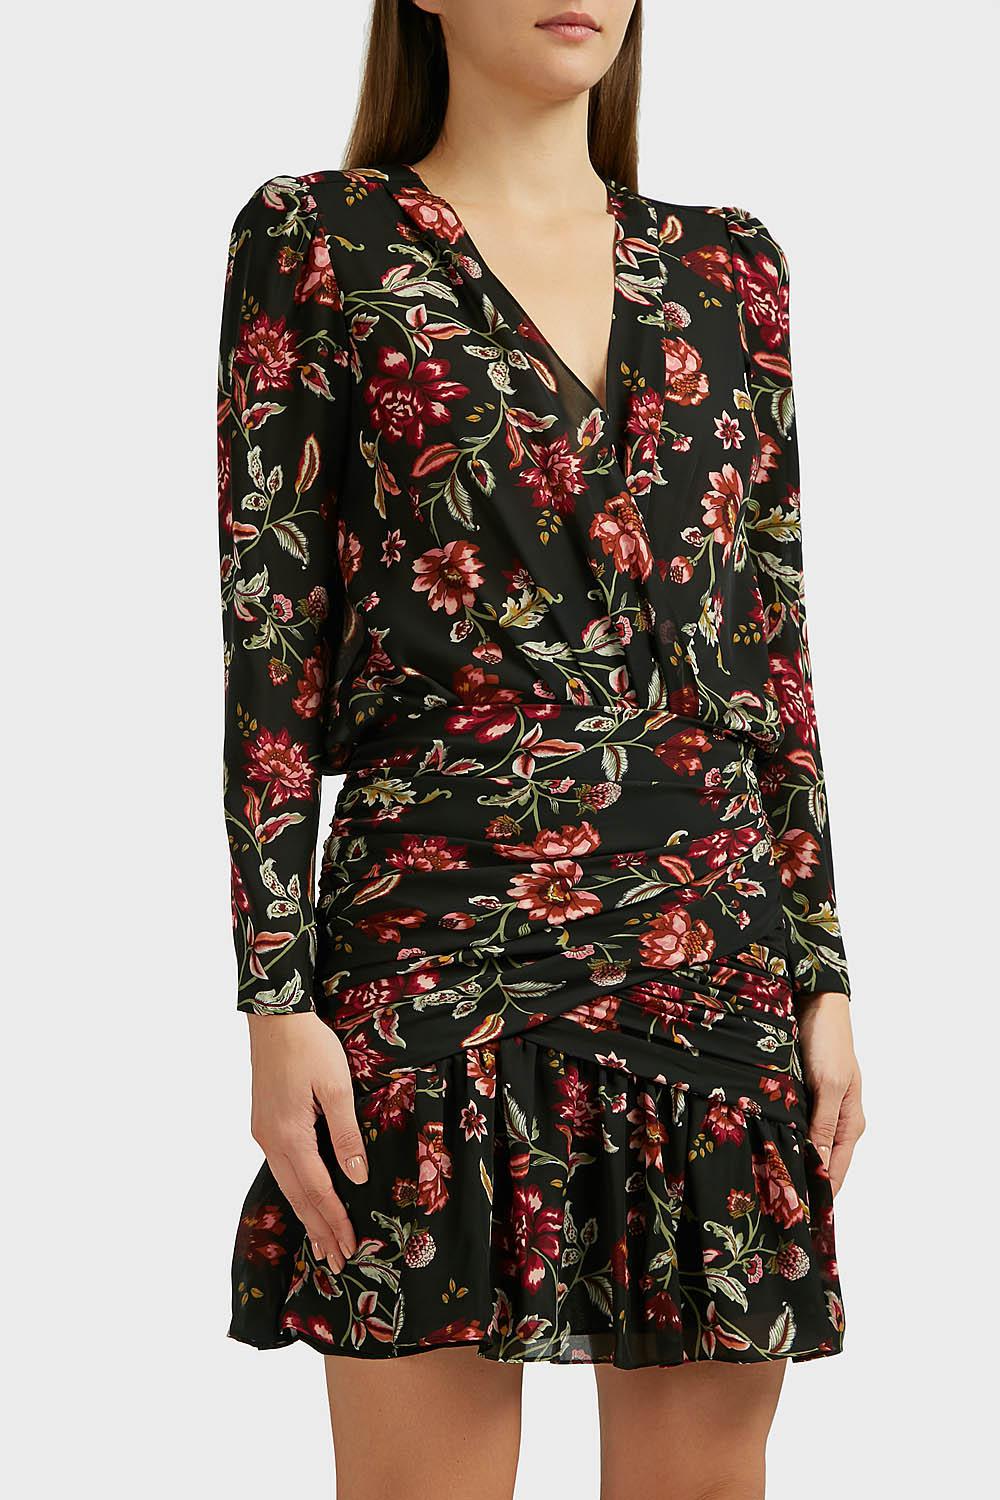 alc floral dress